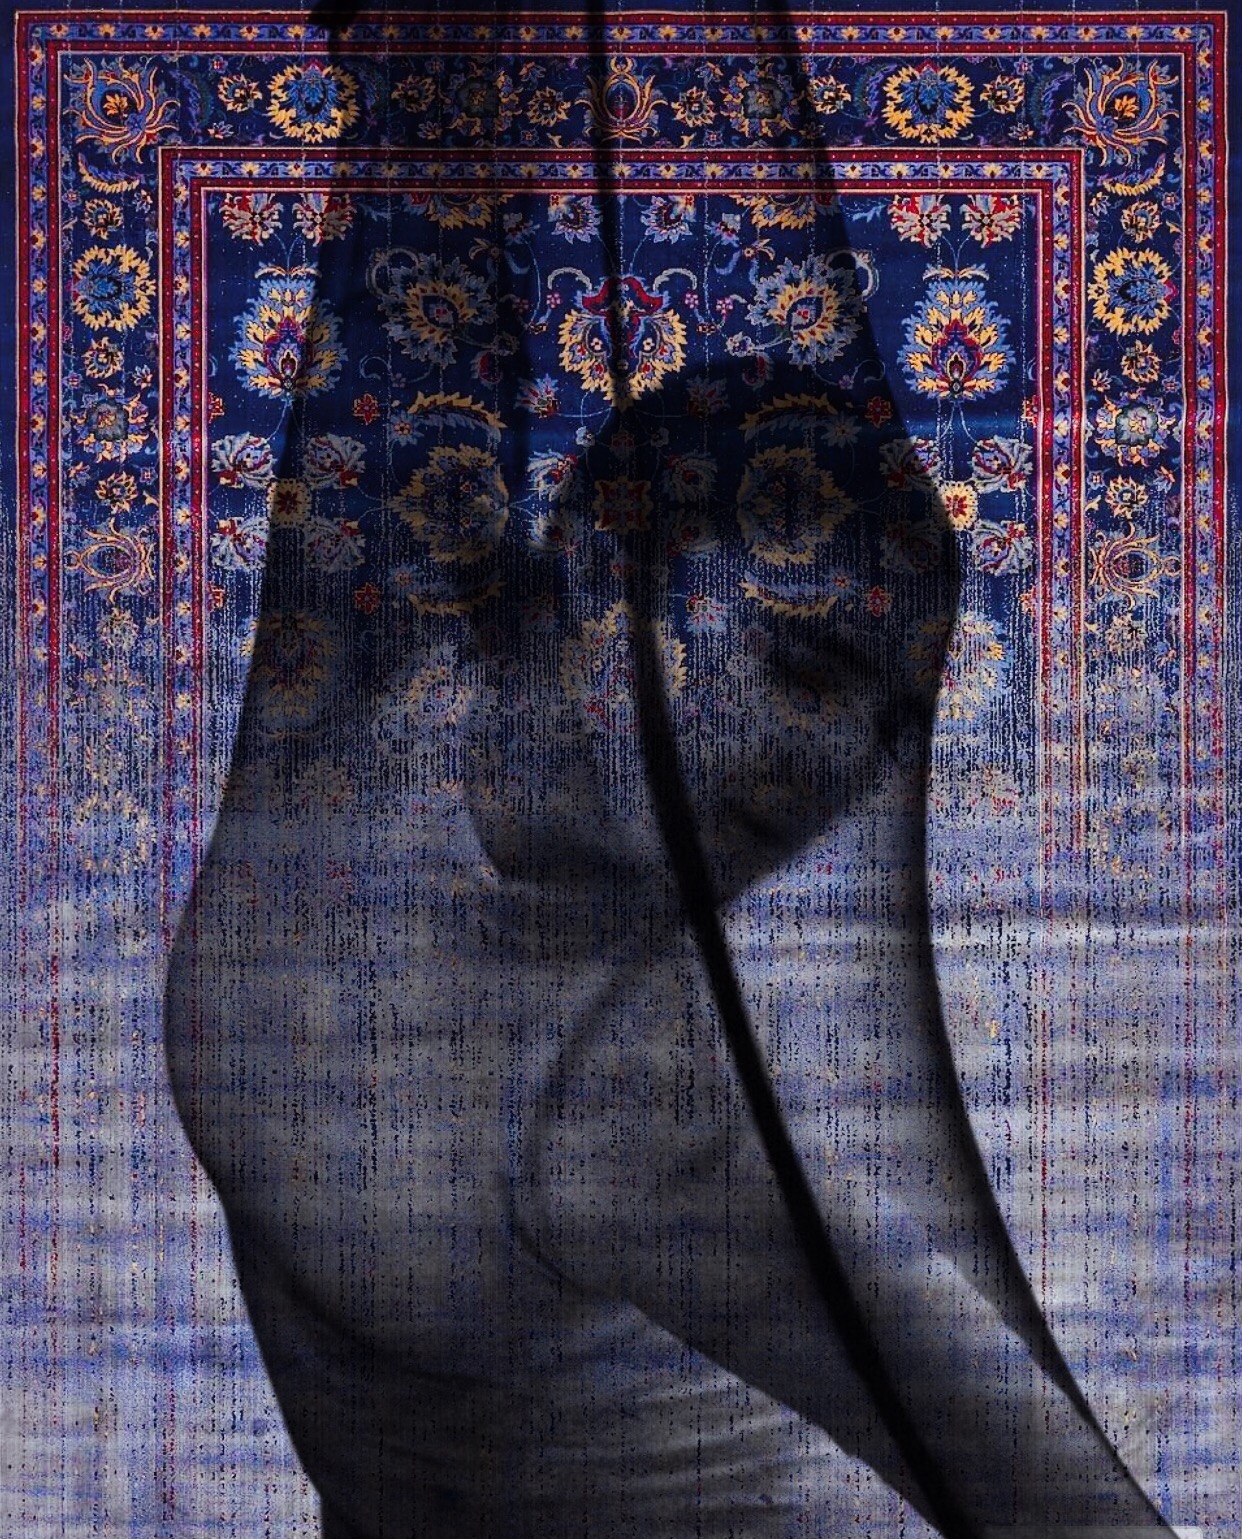 Xenia, 2016-17, Acrylic on carpet, 60x48 inch